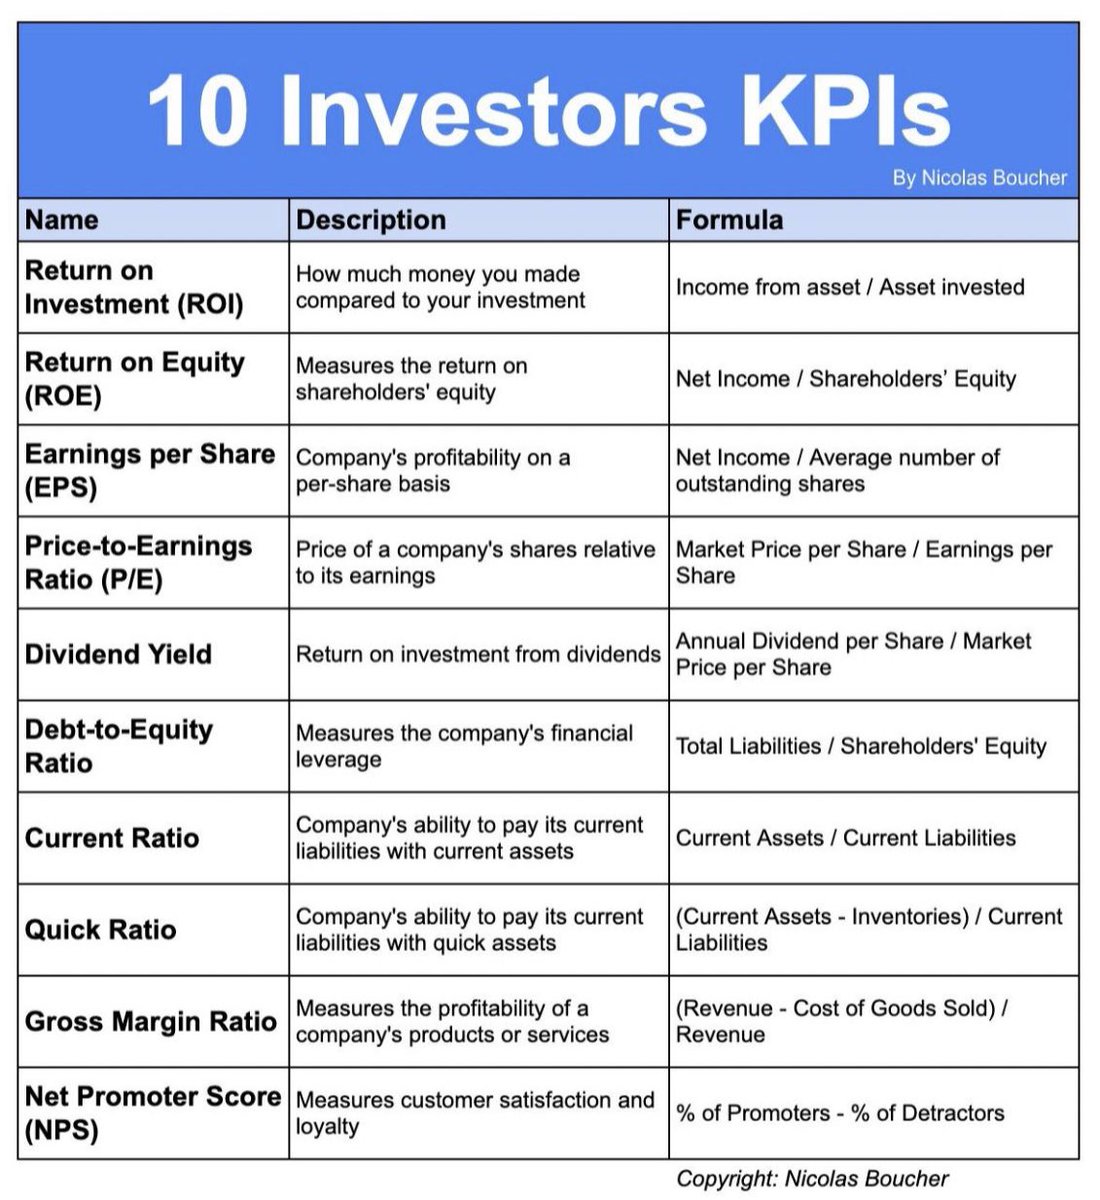 10 Investors KPIs to follow